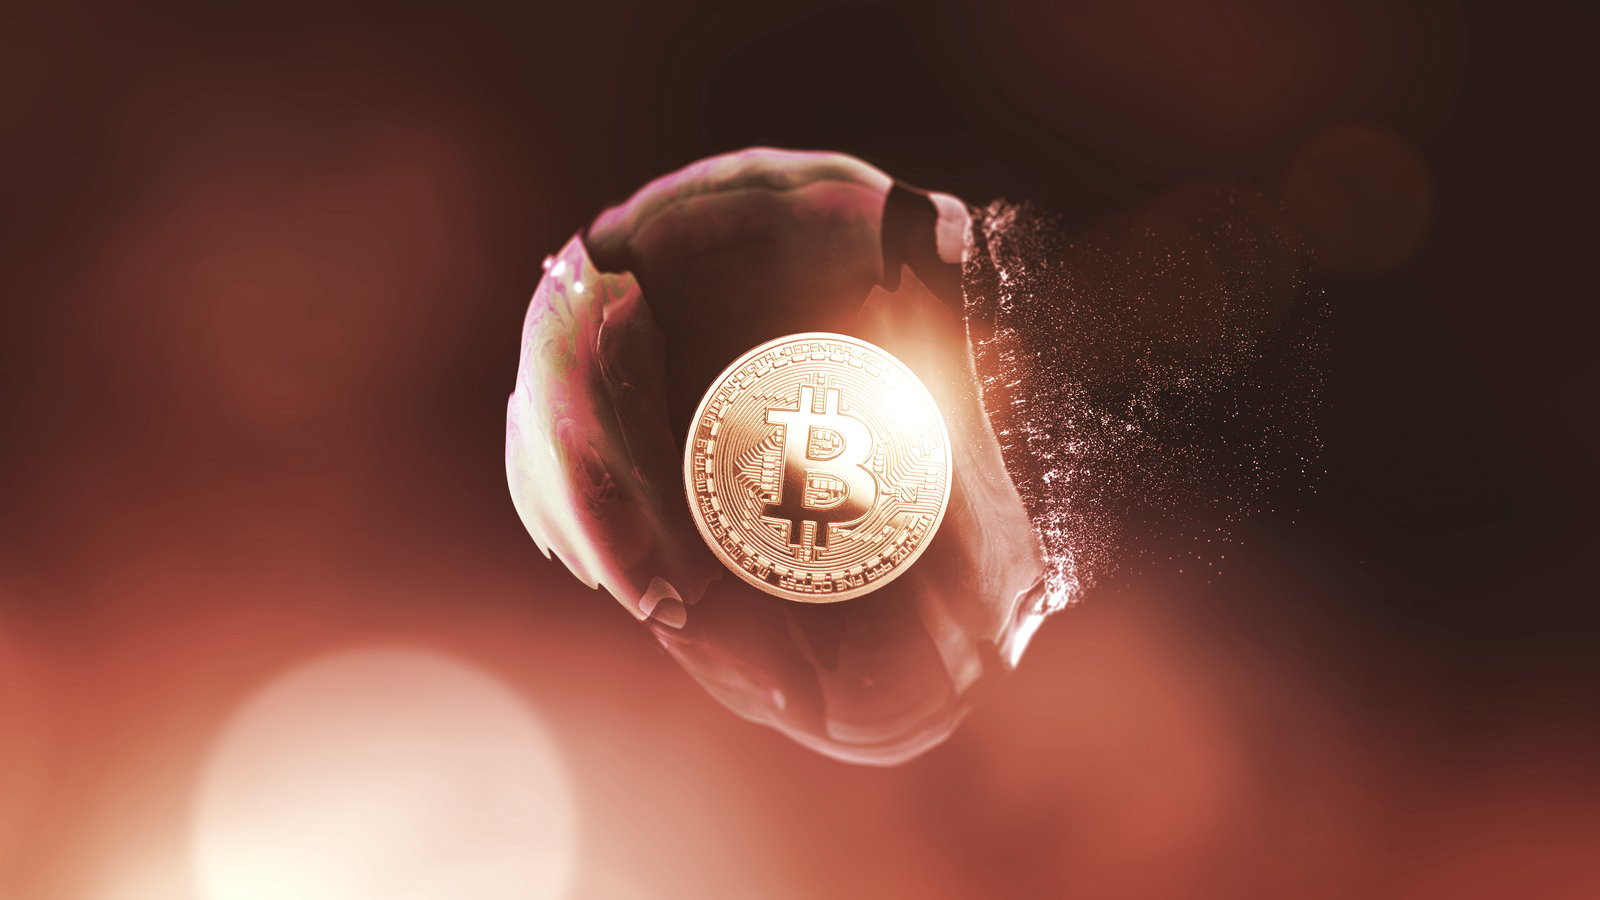 A Bitcoin bubble bursting. Image: Shutterstock